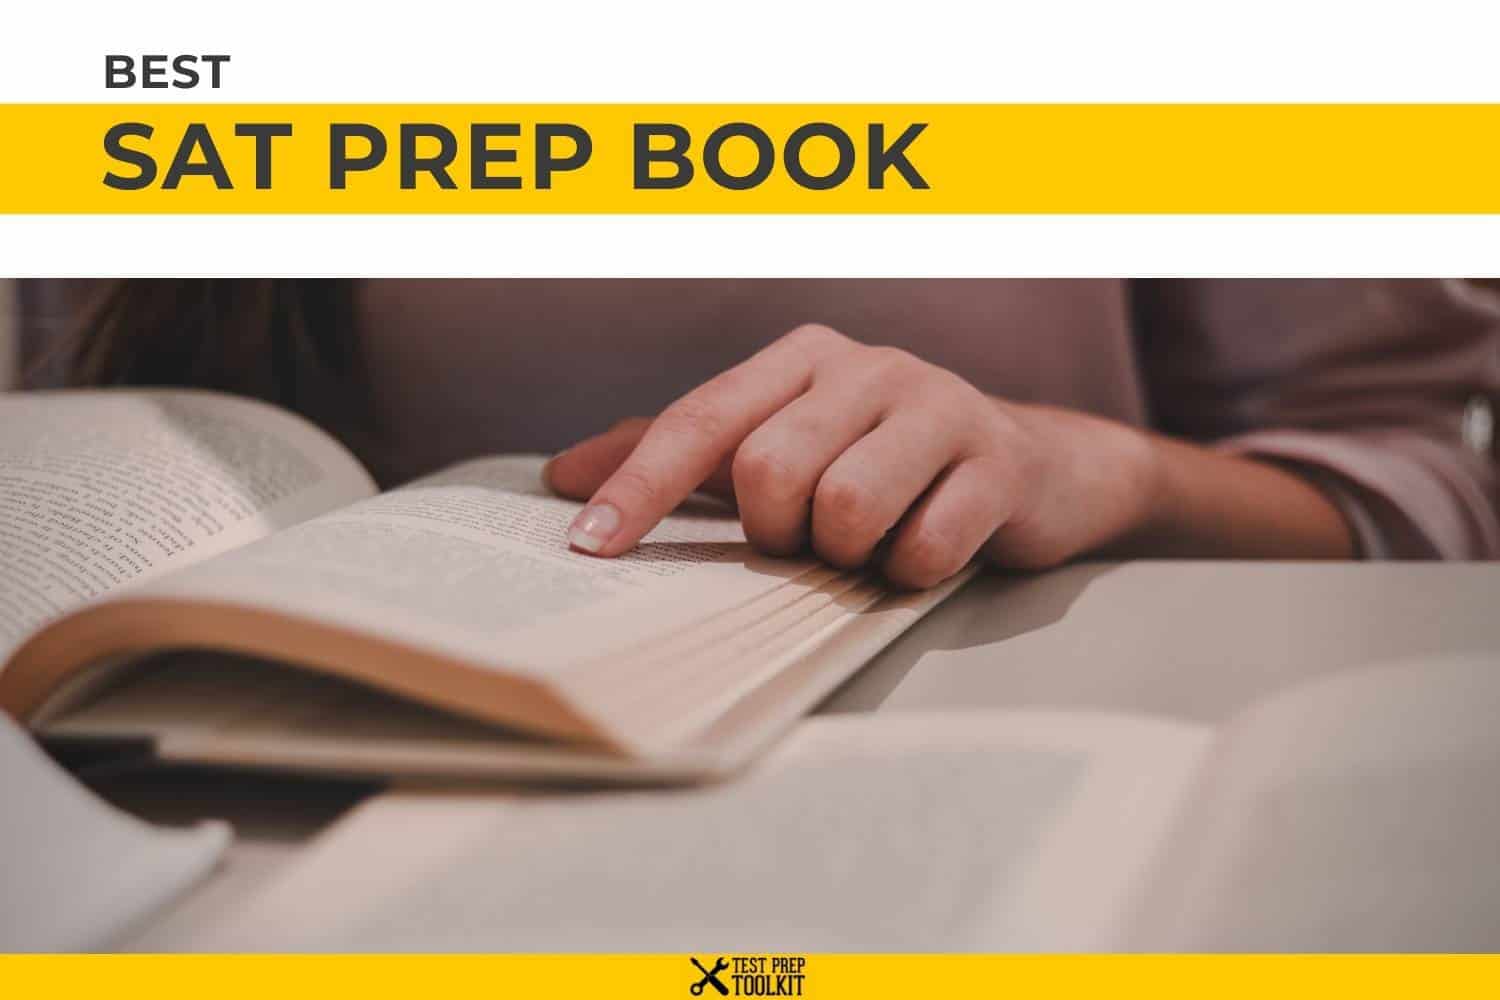 Best SAT Prep Book Test Prep Toolkit